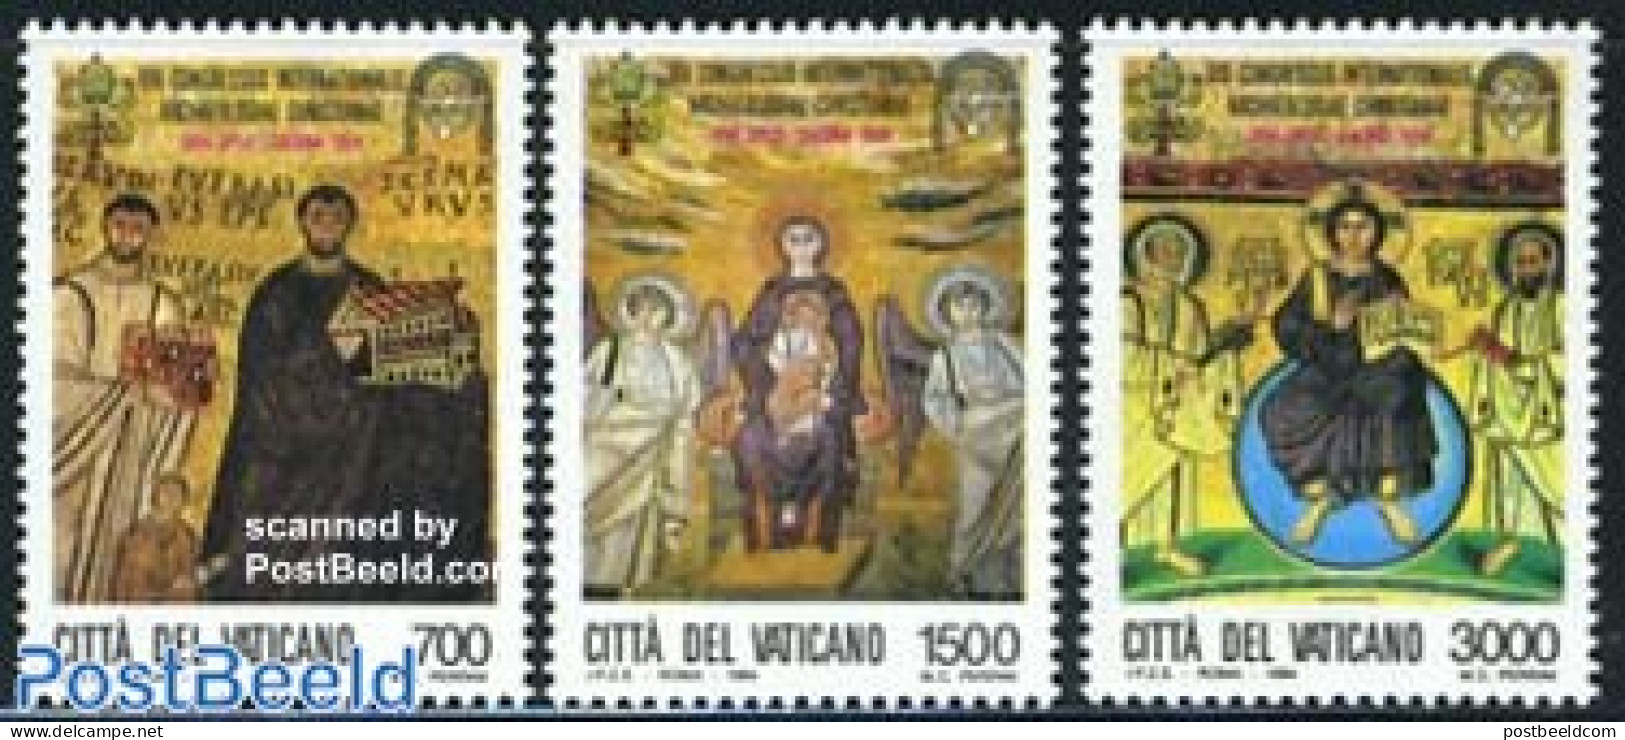 Vatican 1994 Archaeology Congress 3v, Mint NH, Religion - Religion - Neufs